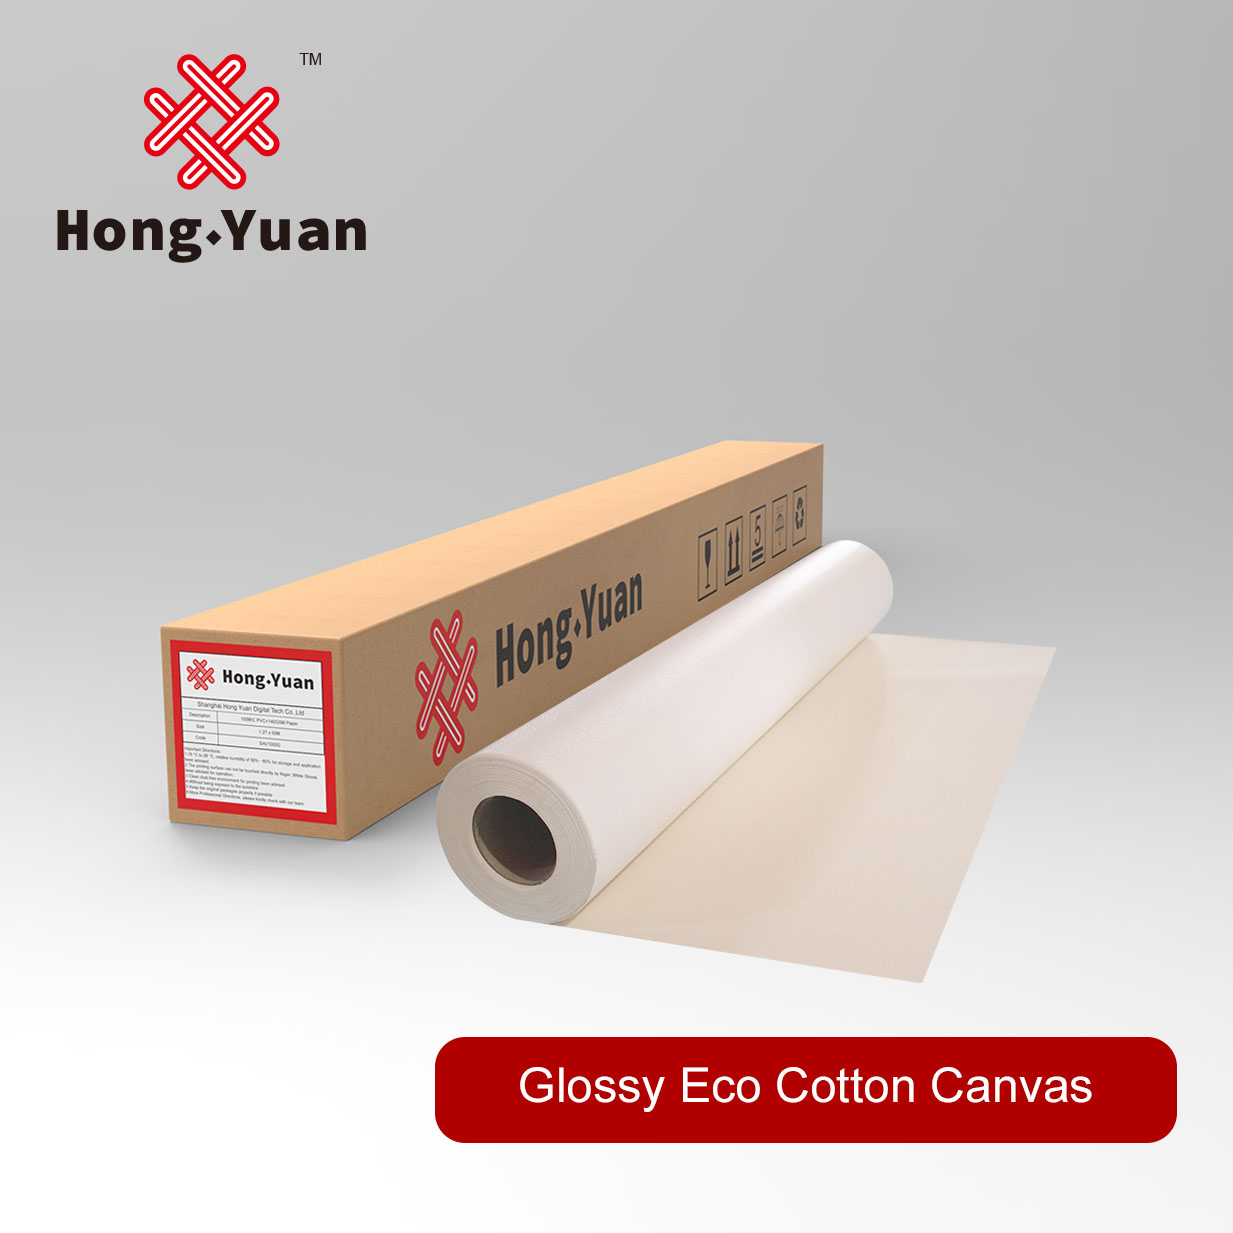 Glossy Eco Cotton Canvas EMC300G